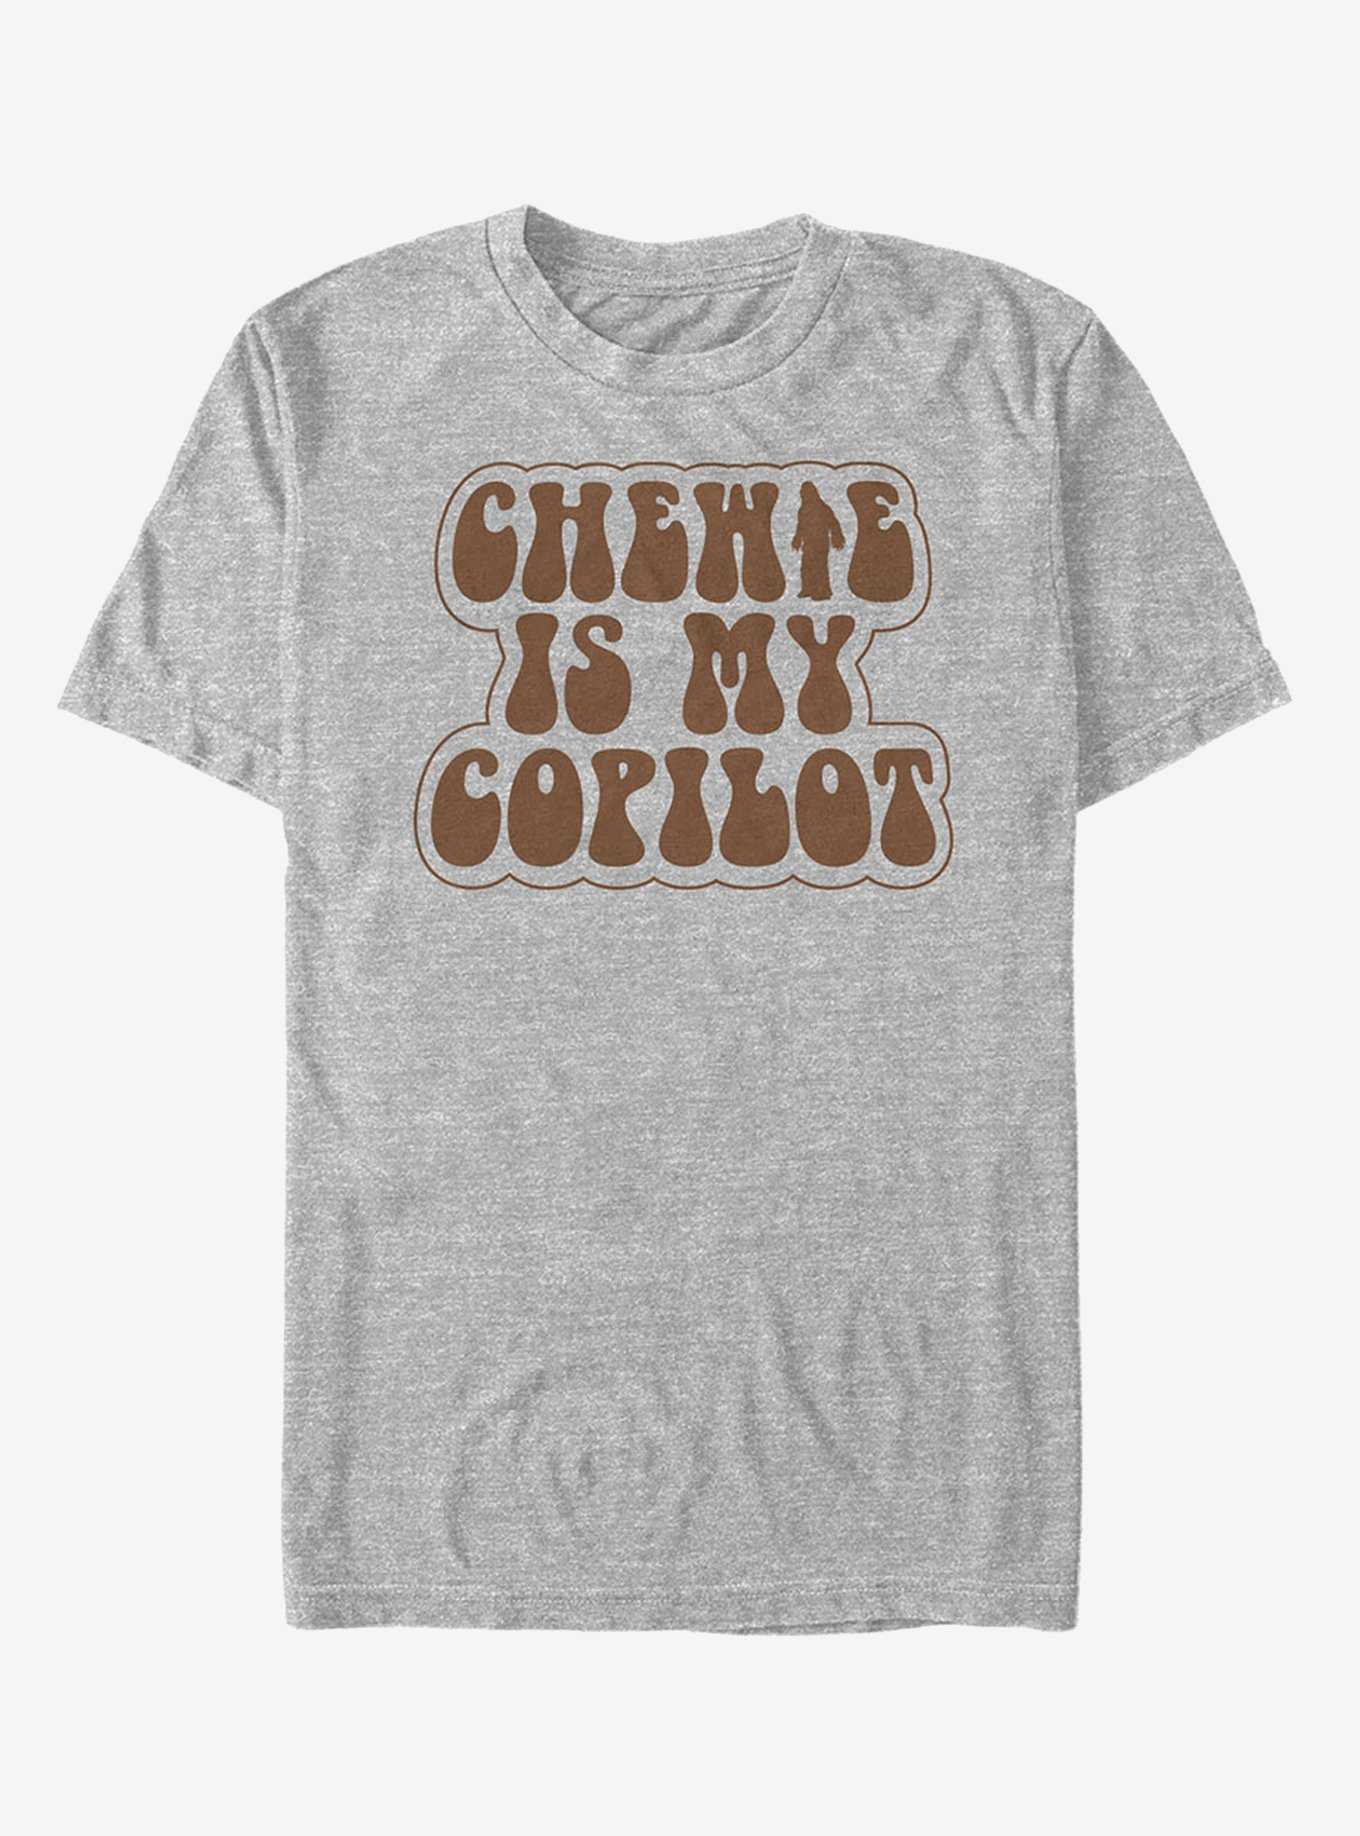 Star Wars Retro Chewie Copilot T-Shirt, , hi-res